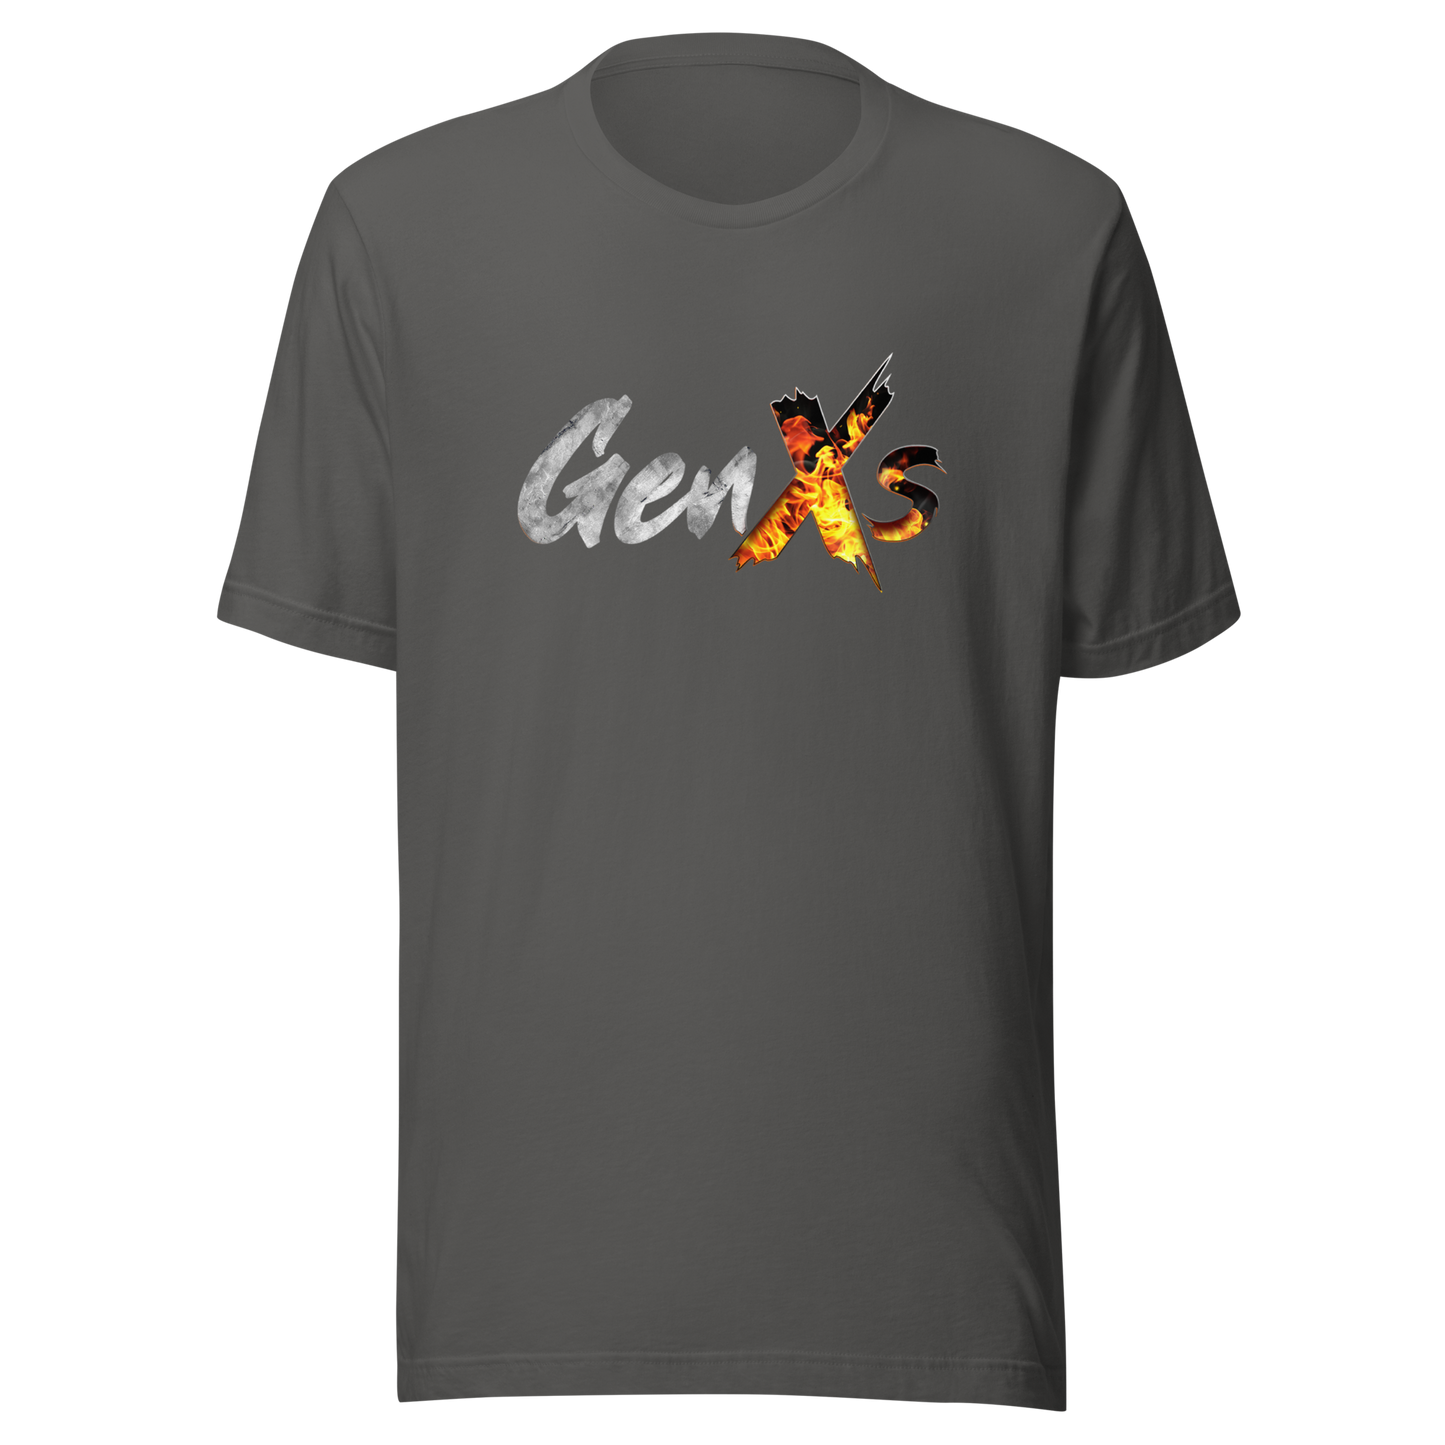 GenXs Unisex t-shirt